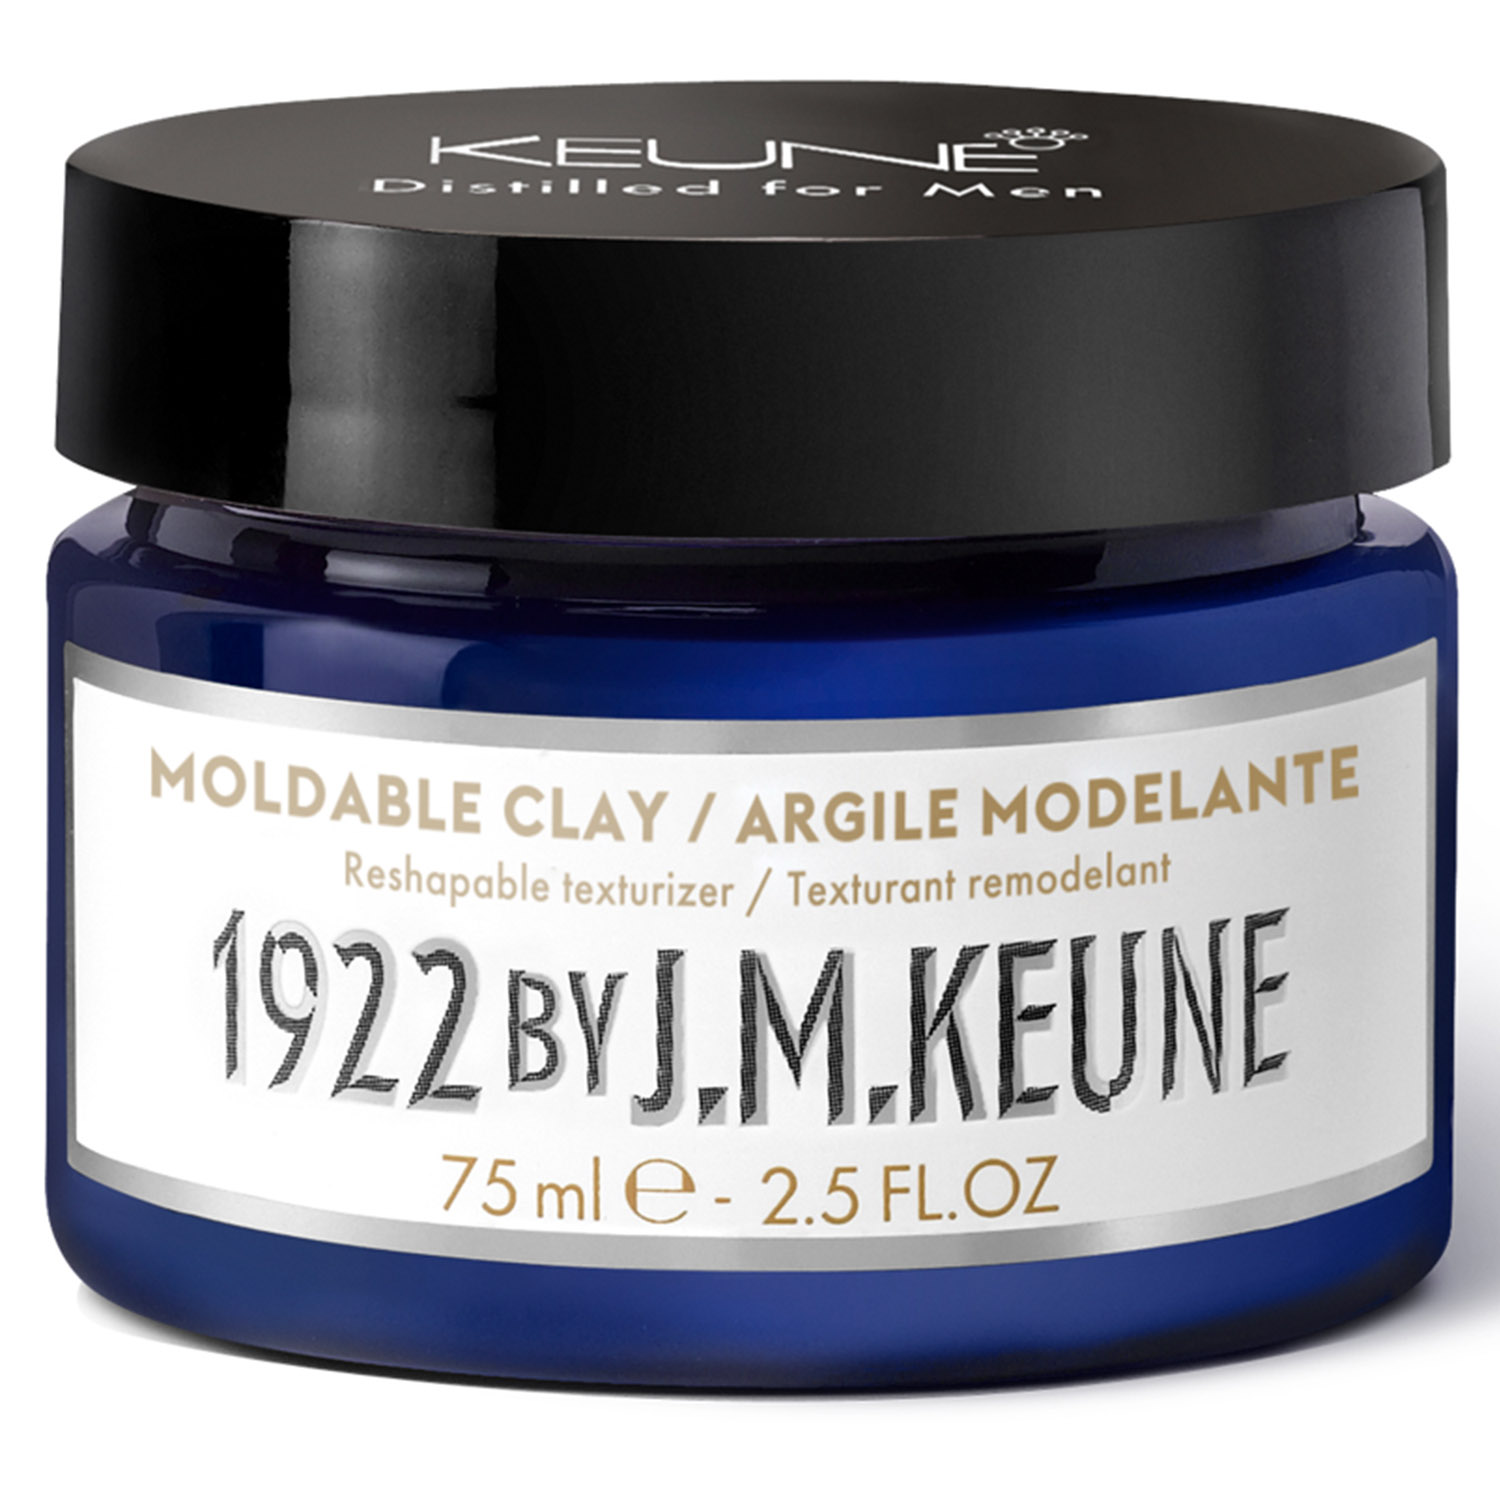 Keune Моделирующая глина для укладки волос Moldable Clay, 75 мл (Keune, 1922 by J.M. Keune) глина keune 1922 by j m keune premium clay 75 мл